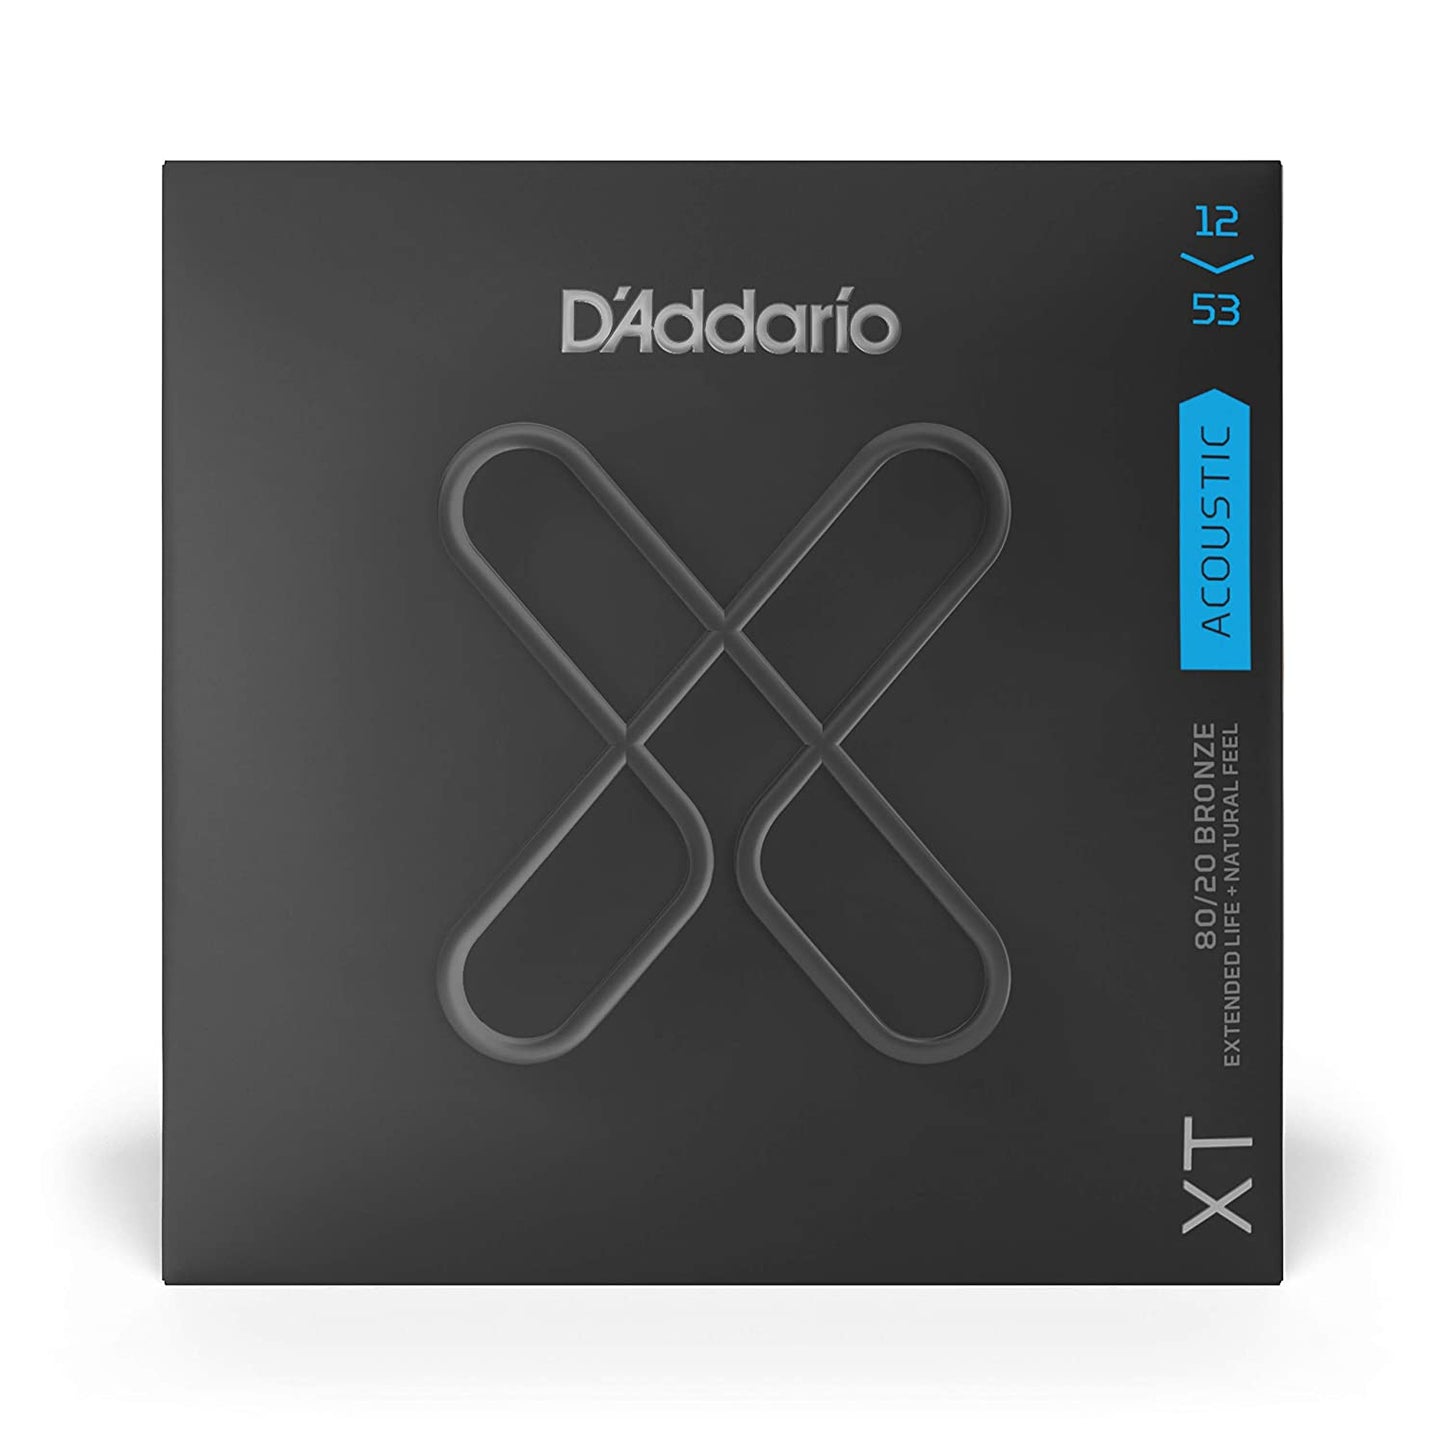 D'Addario XT Acoustic Strings